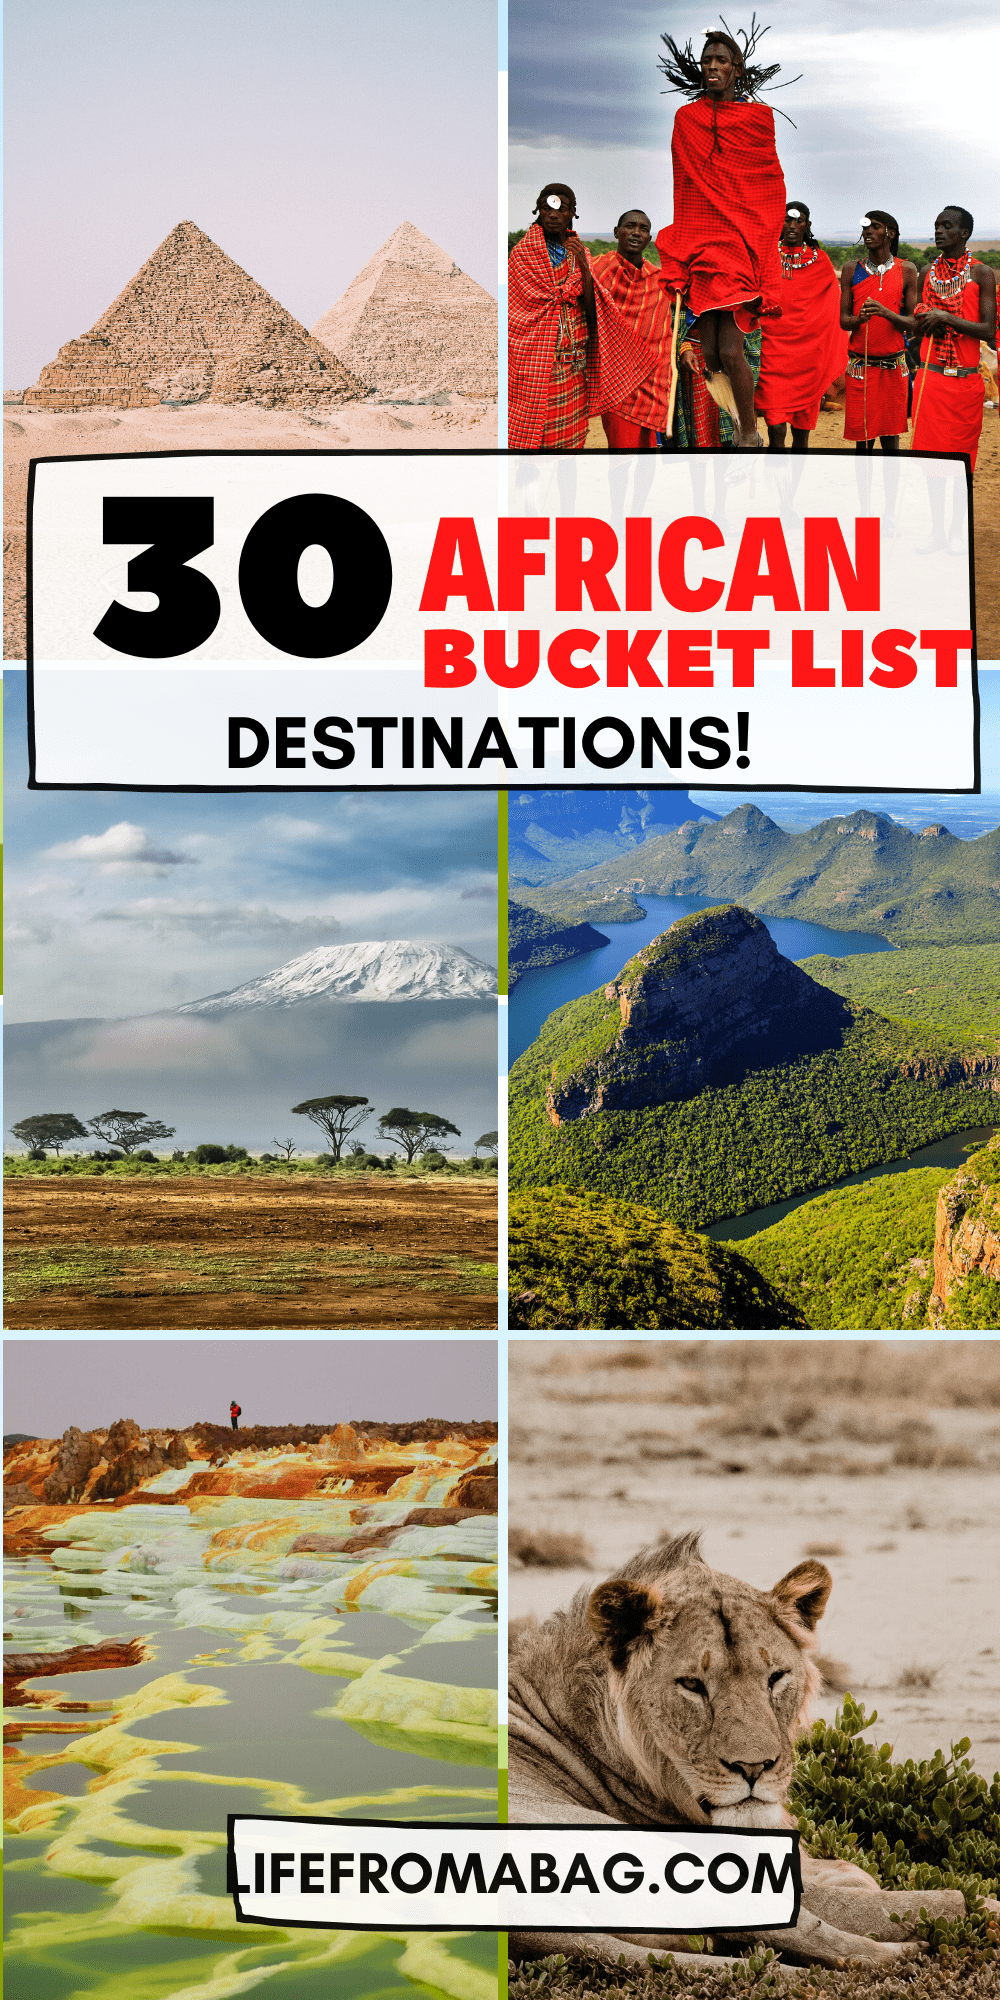 Africa Bucket List